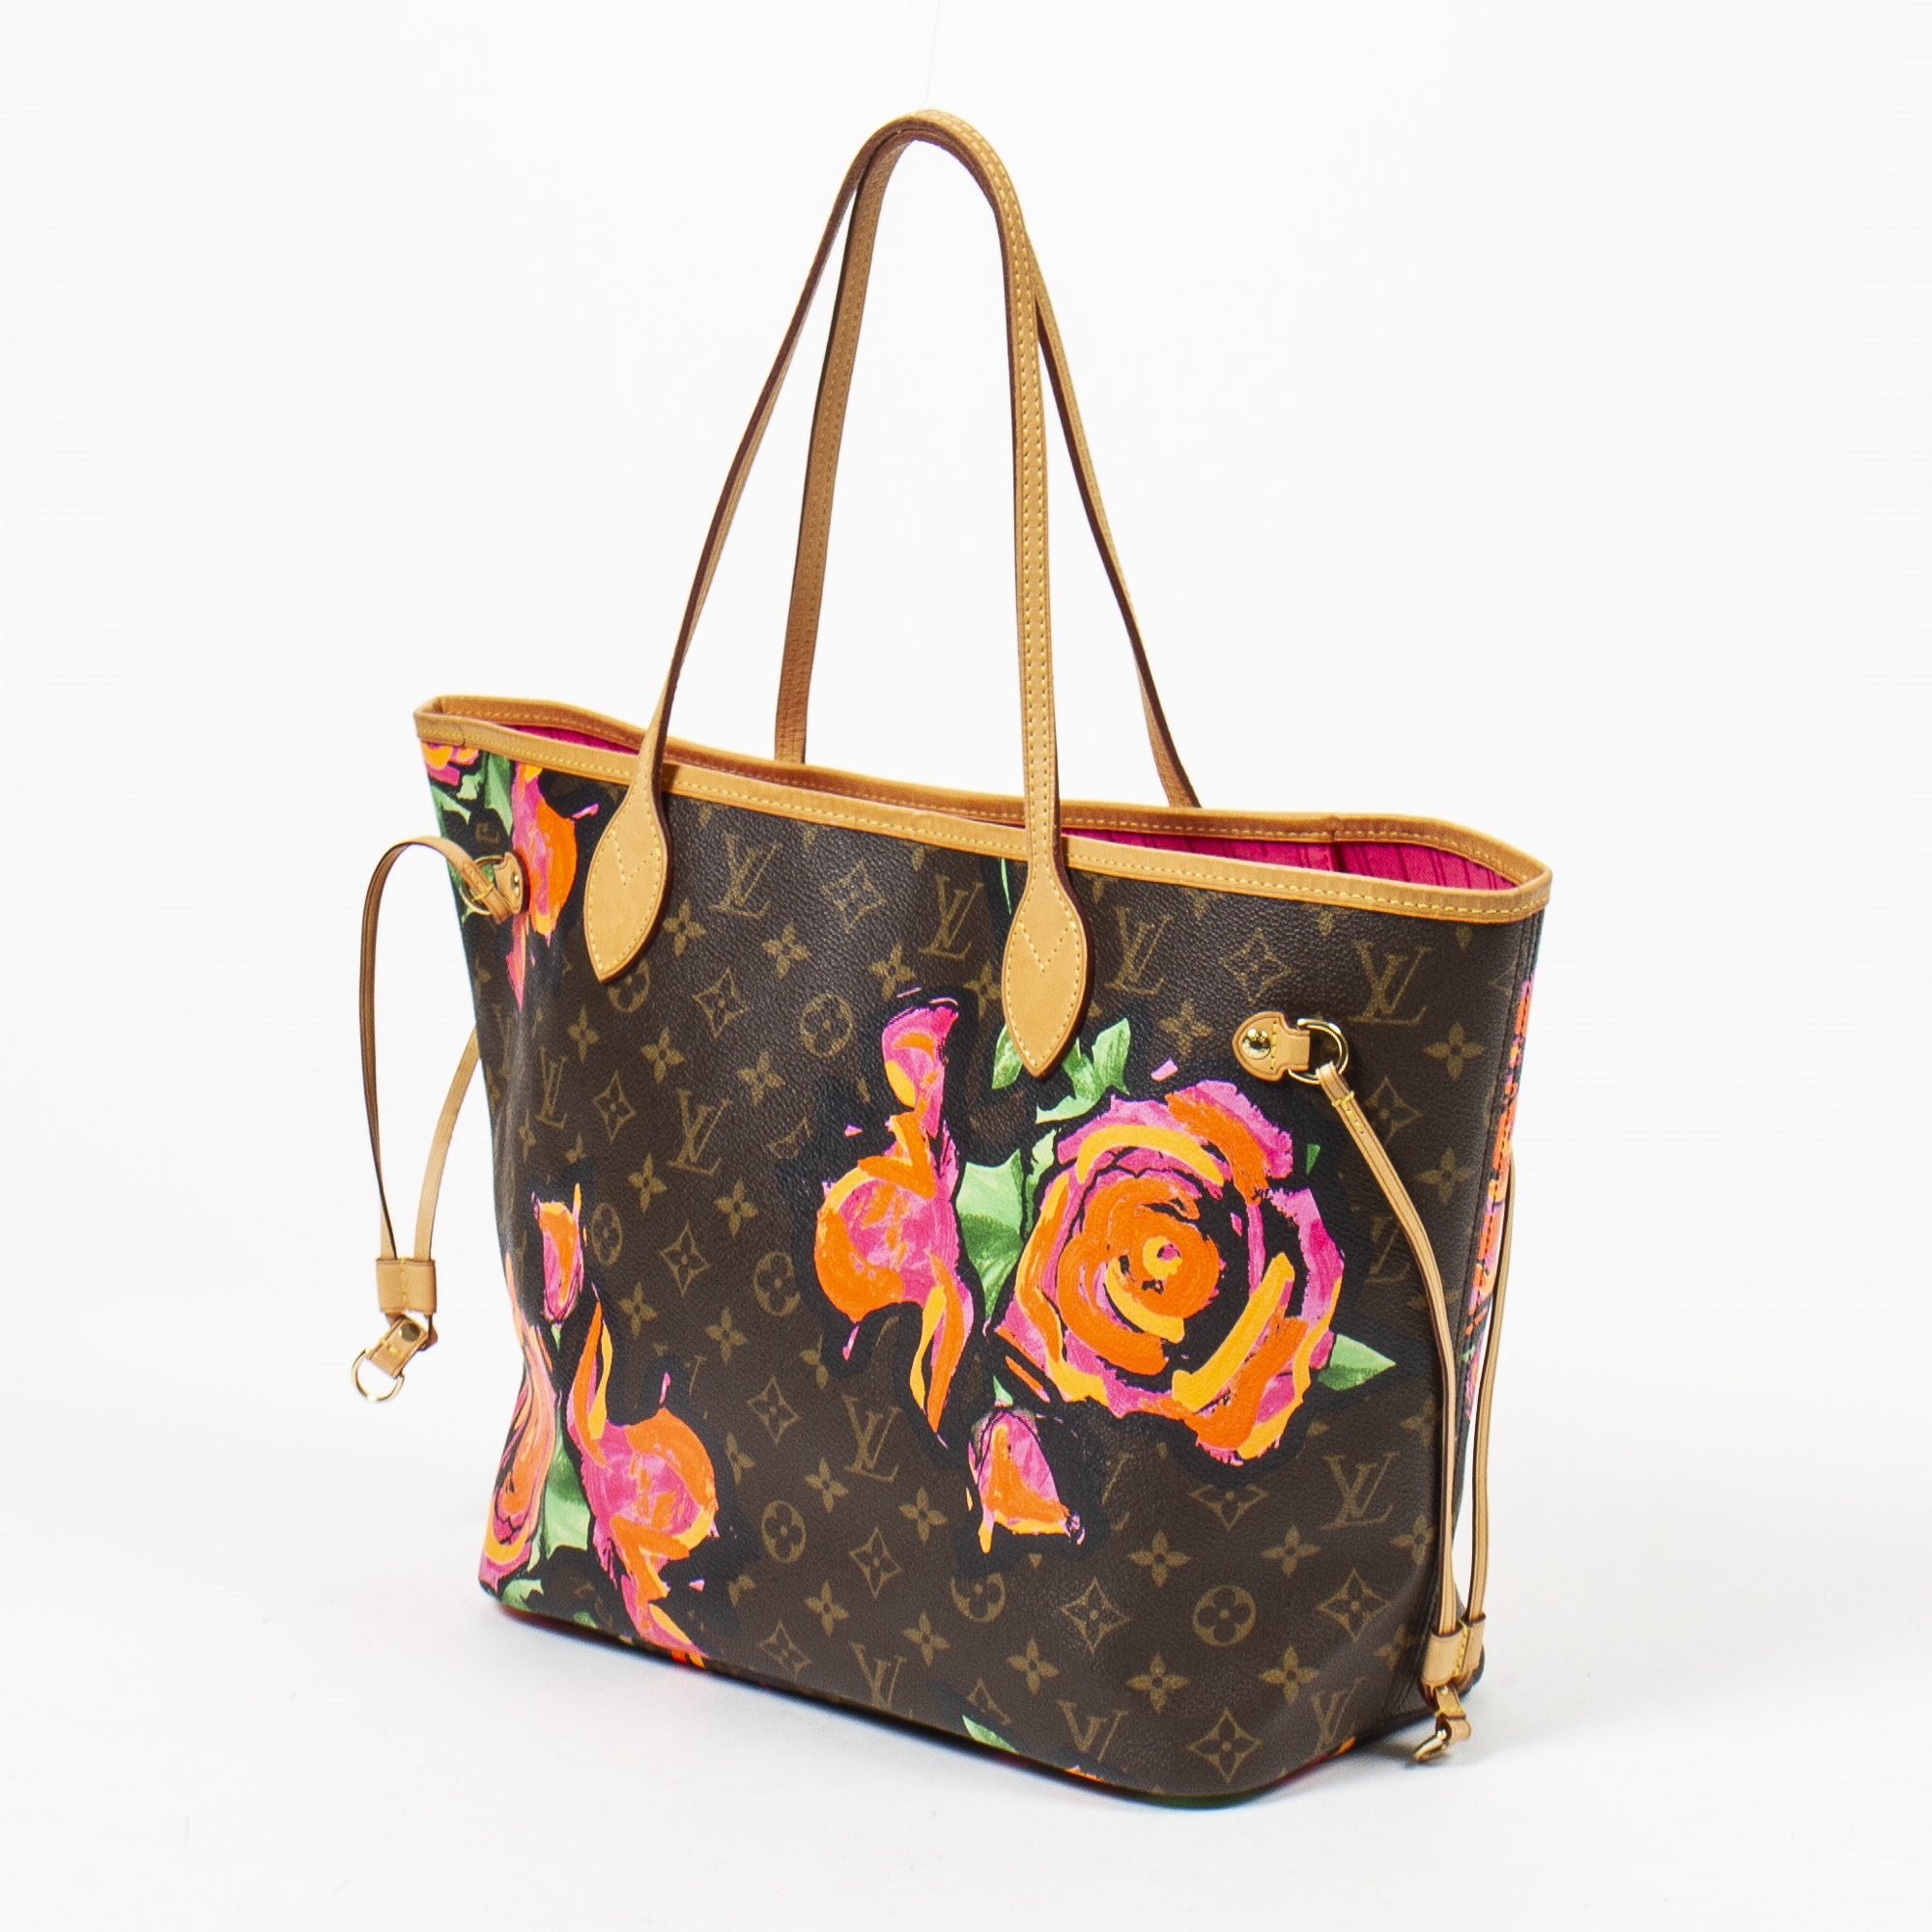 At Auction: Louis Vuitton, LOUIS VUITTON ROSE PINK NEVERFULL SHOULDER BAG